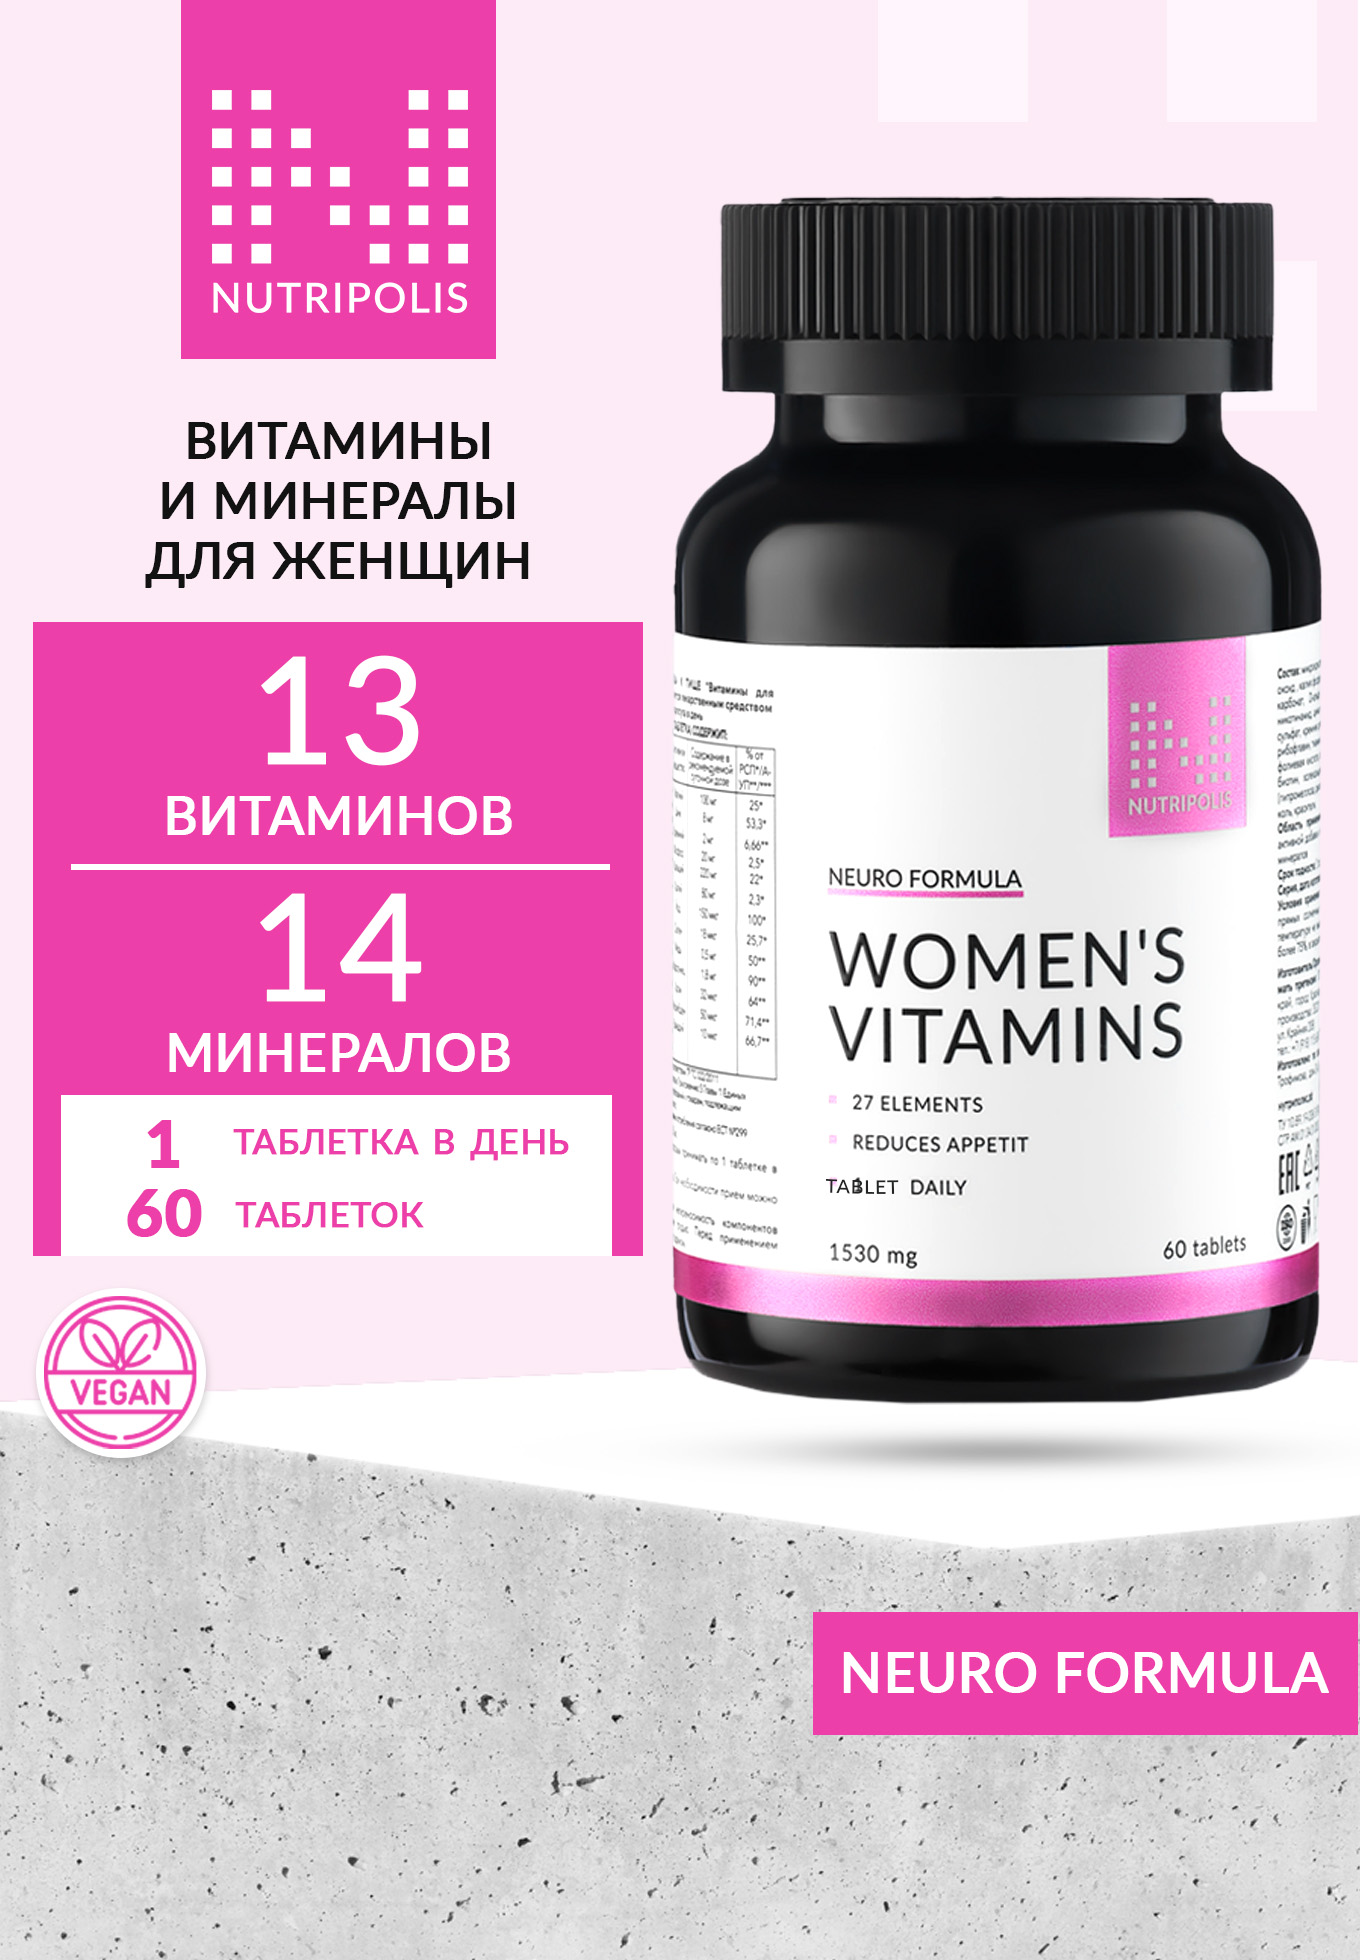 Витамины для женщин NUTRIPOLIS - фото 1